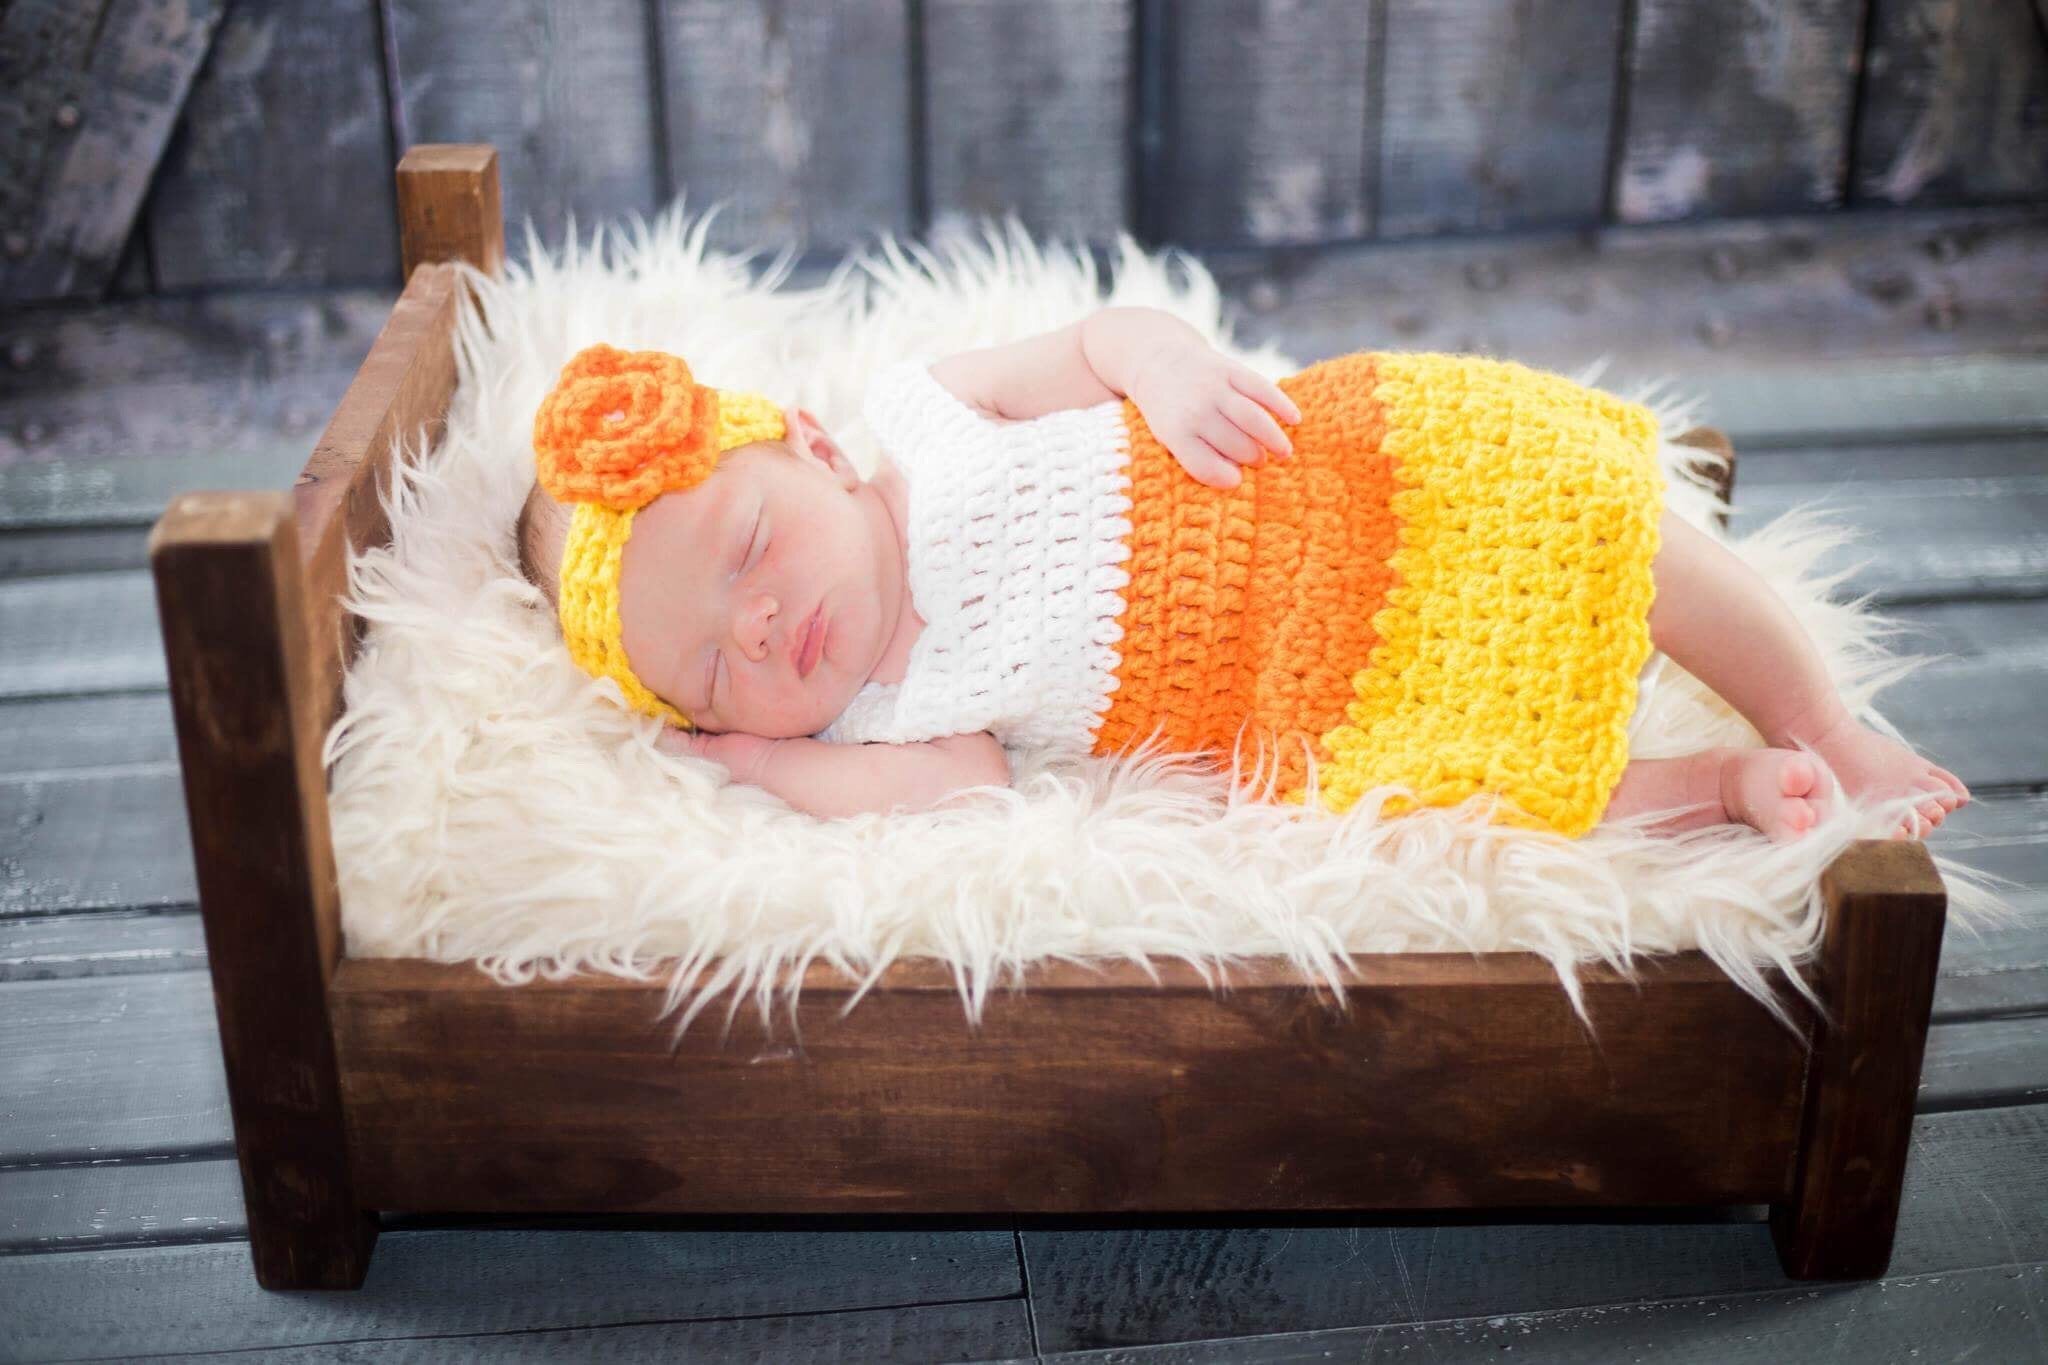 crochet baby candy corn costume pattern